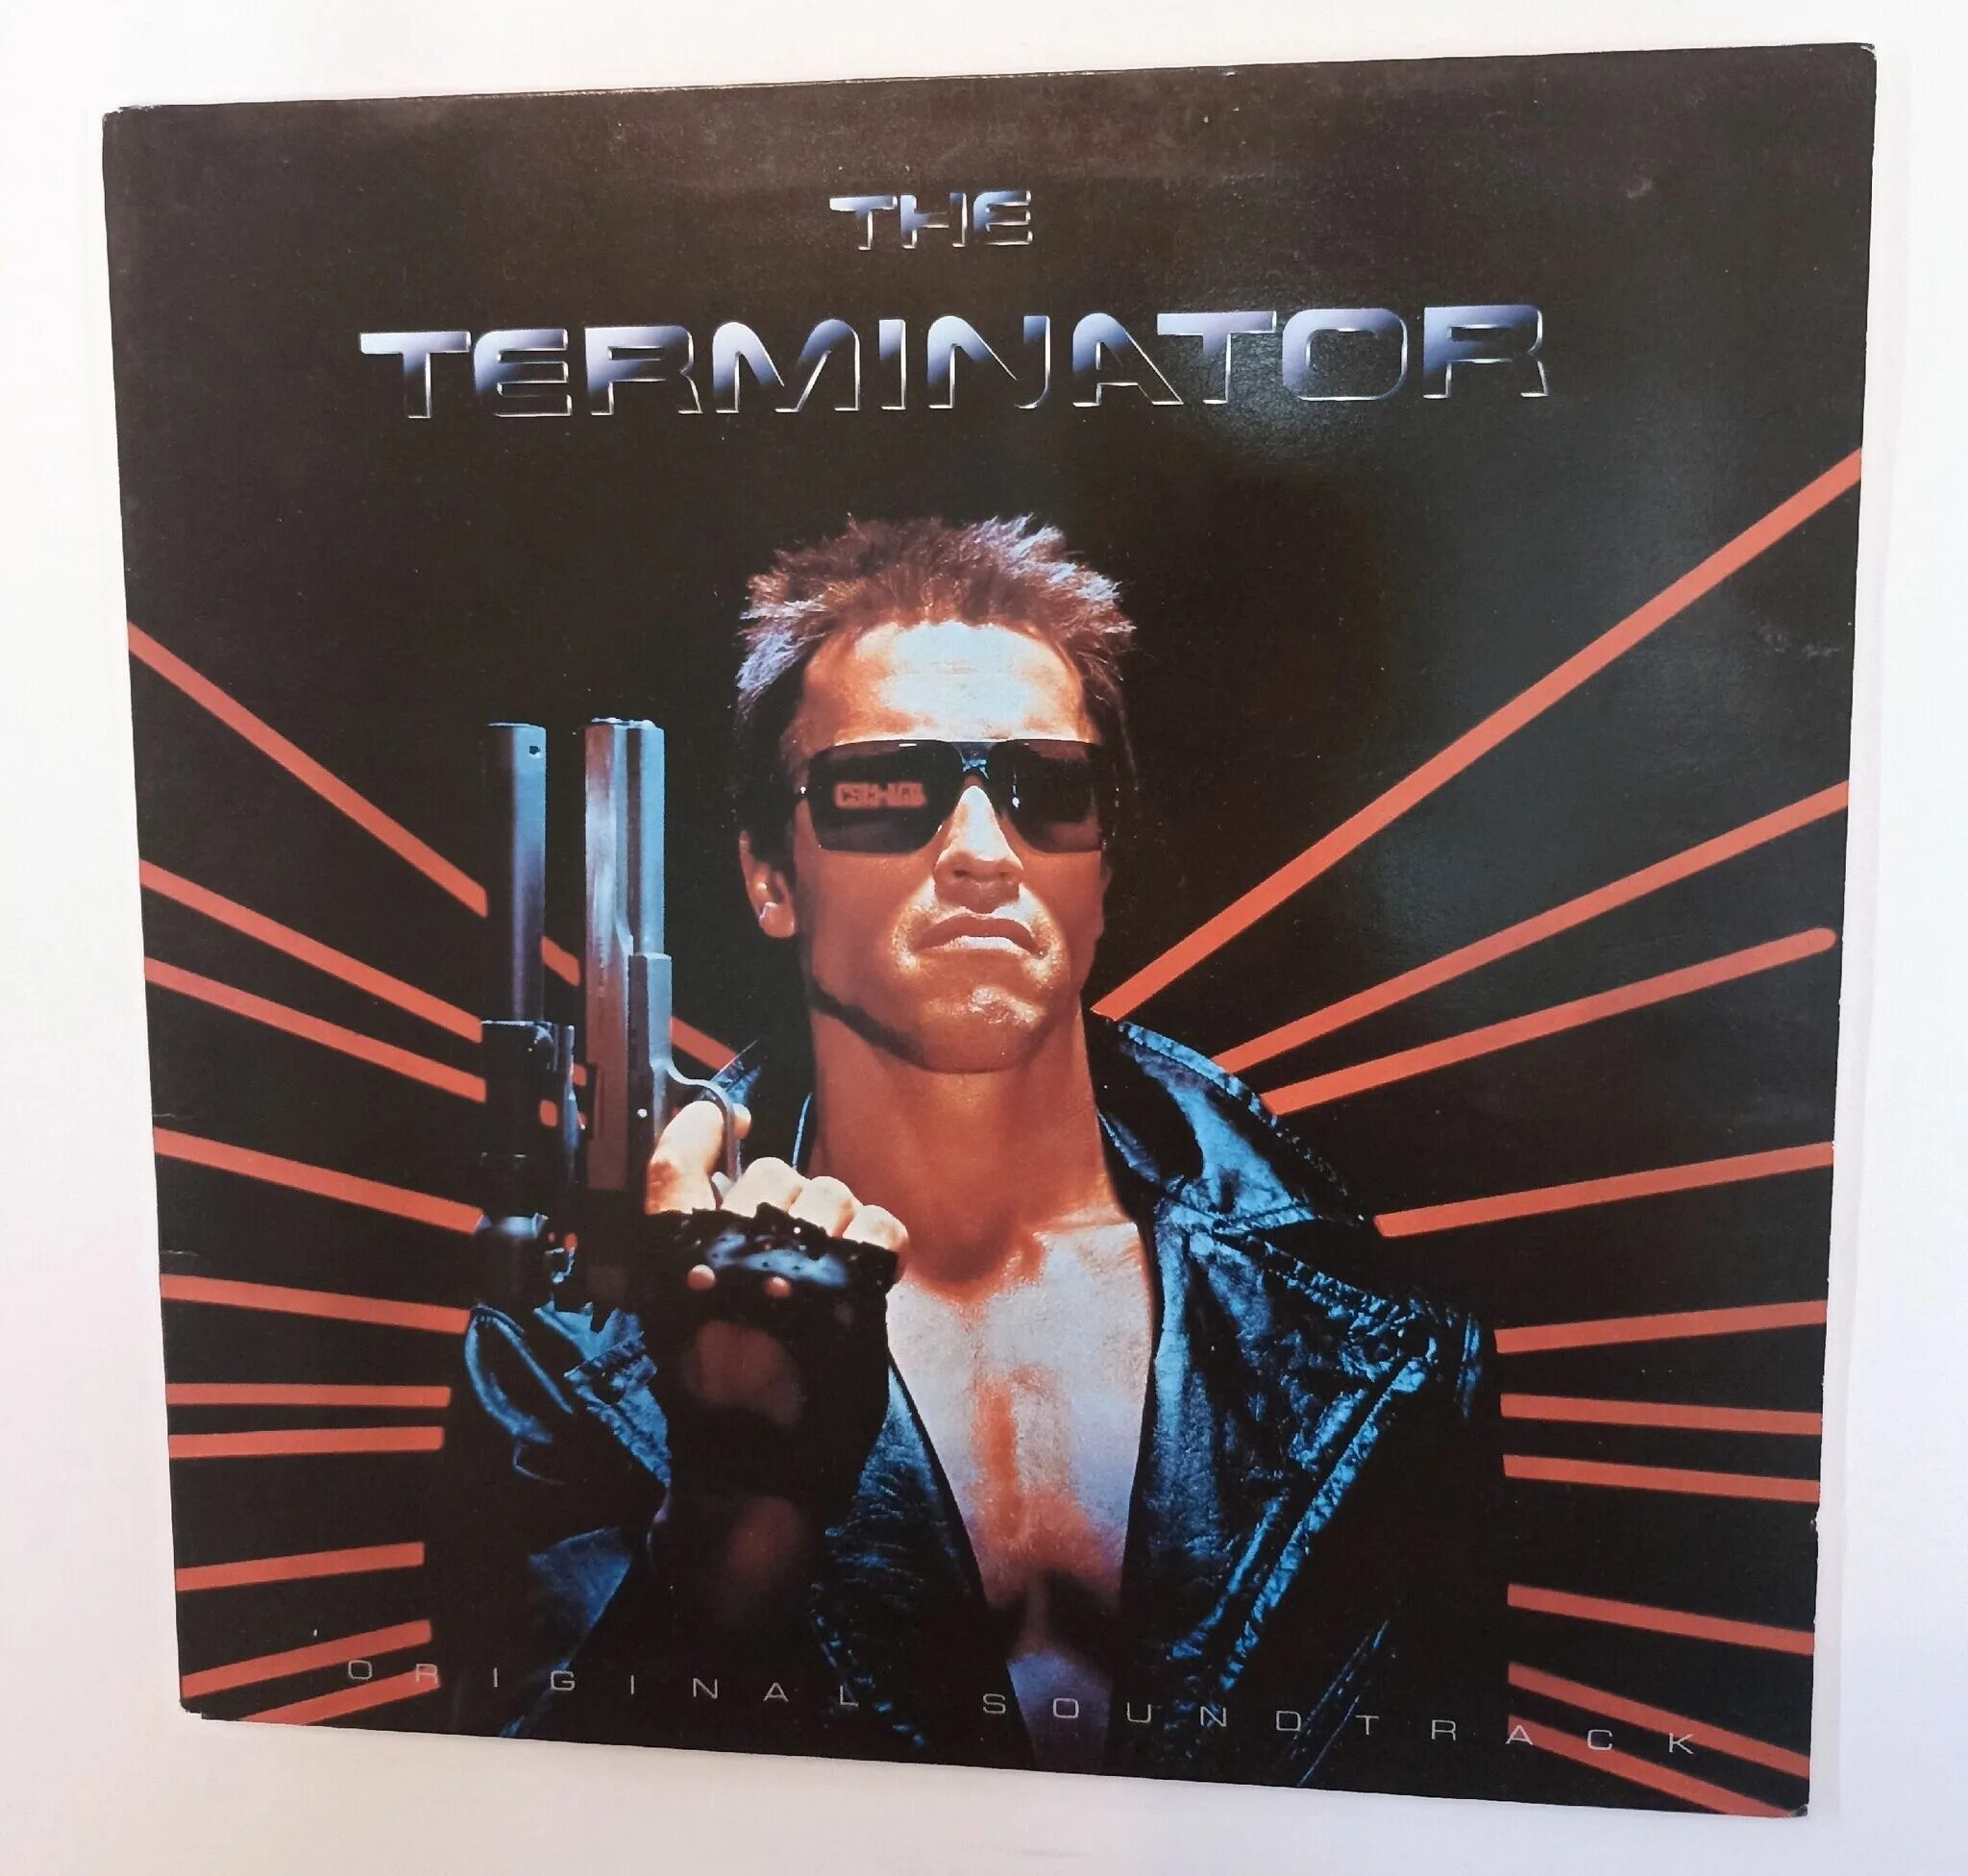 Over brad fiedel. Terminator 1984. Brad Fiedel Terminator 1984.